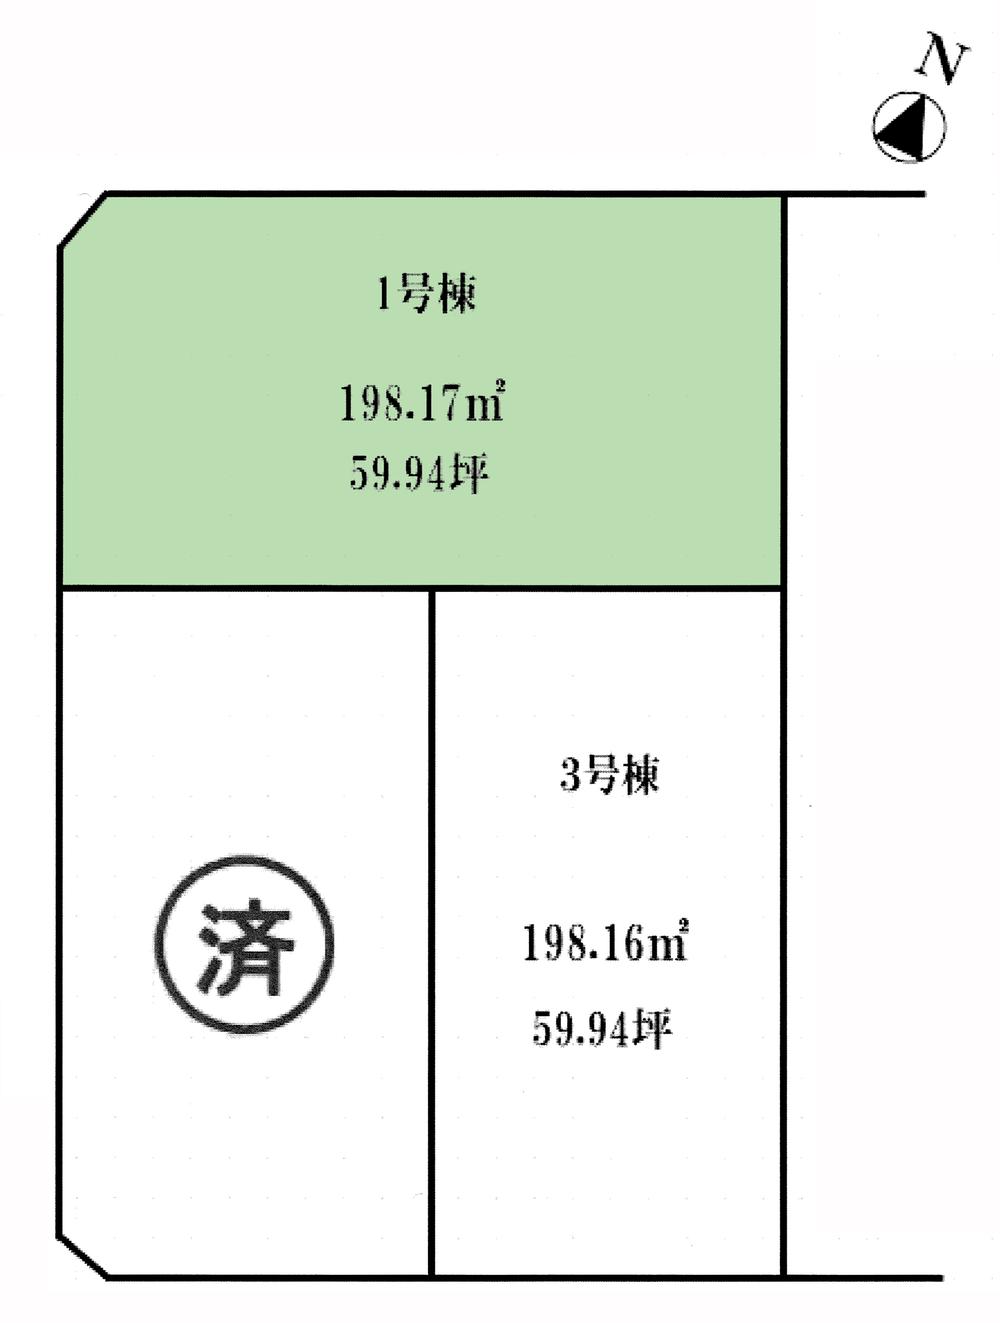 Compartment figure. Land price 18.5 million yen, Land area 198.17 sq m